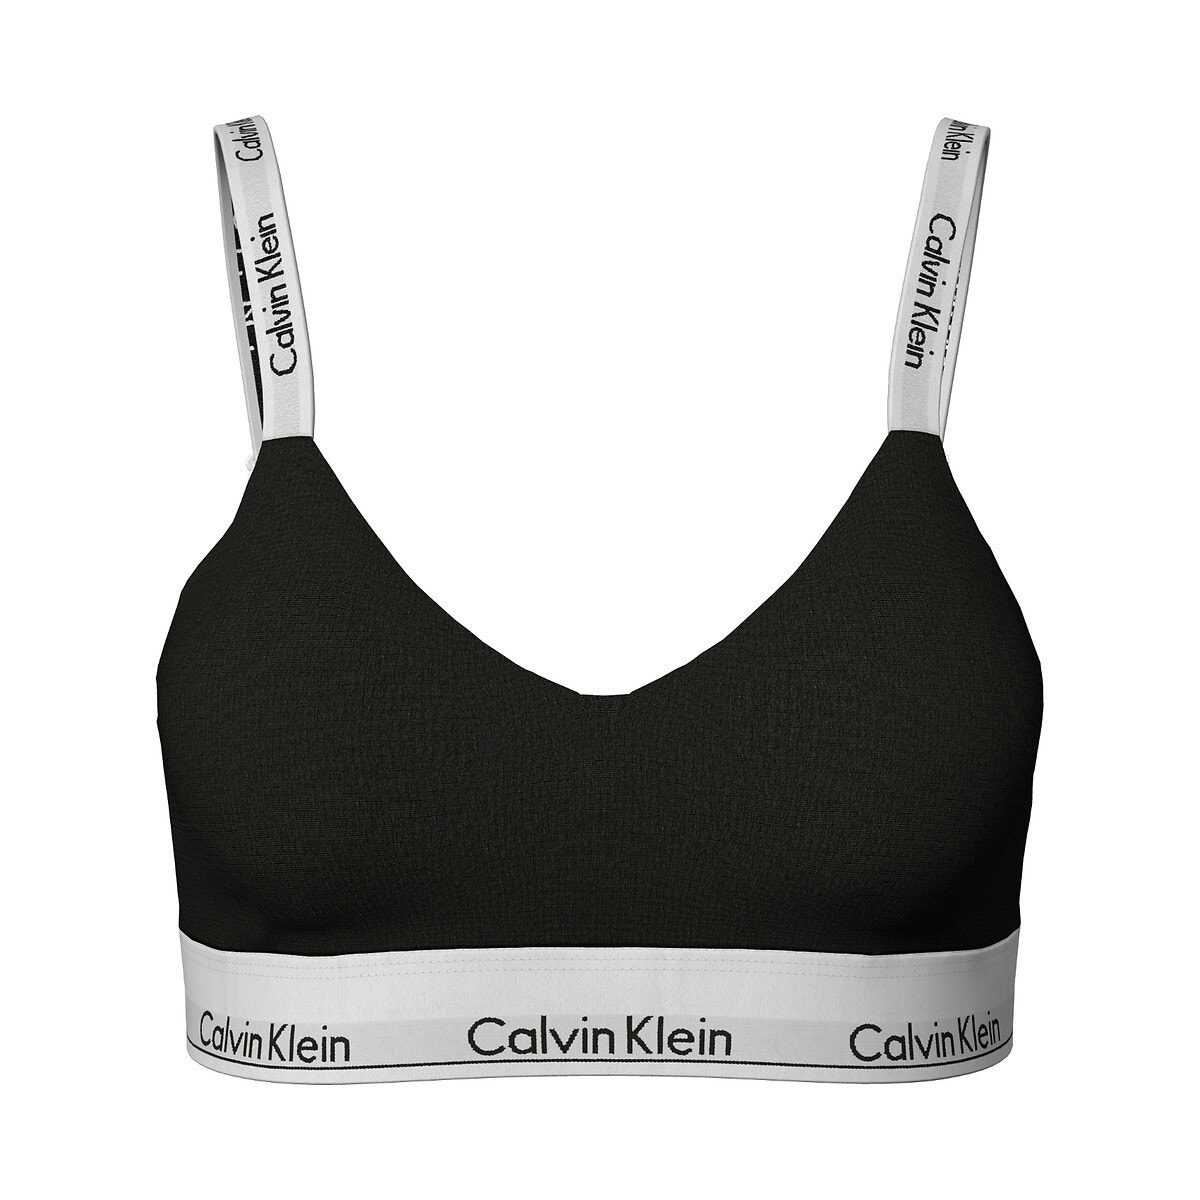 Soutien-gorge triangle - Modern Cotton Calvin Klein®